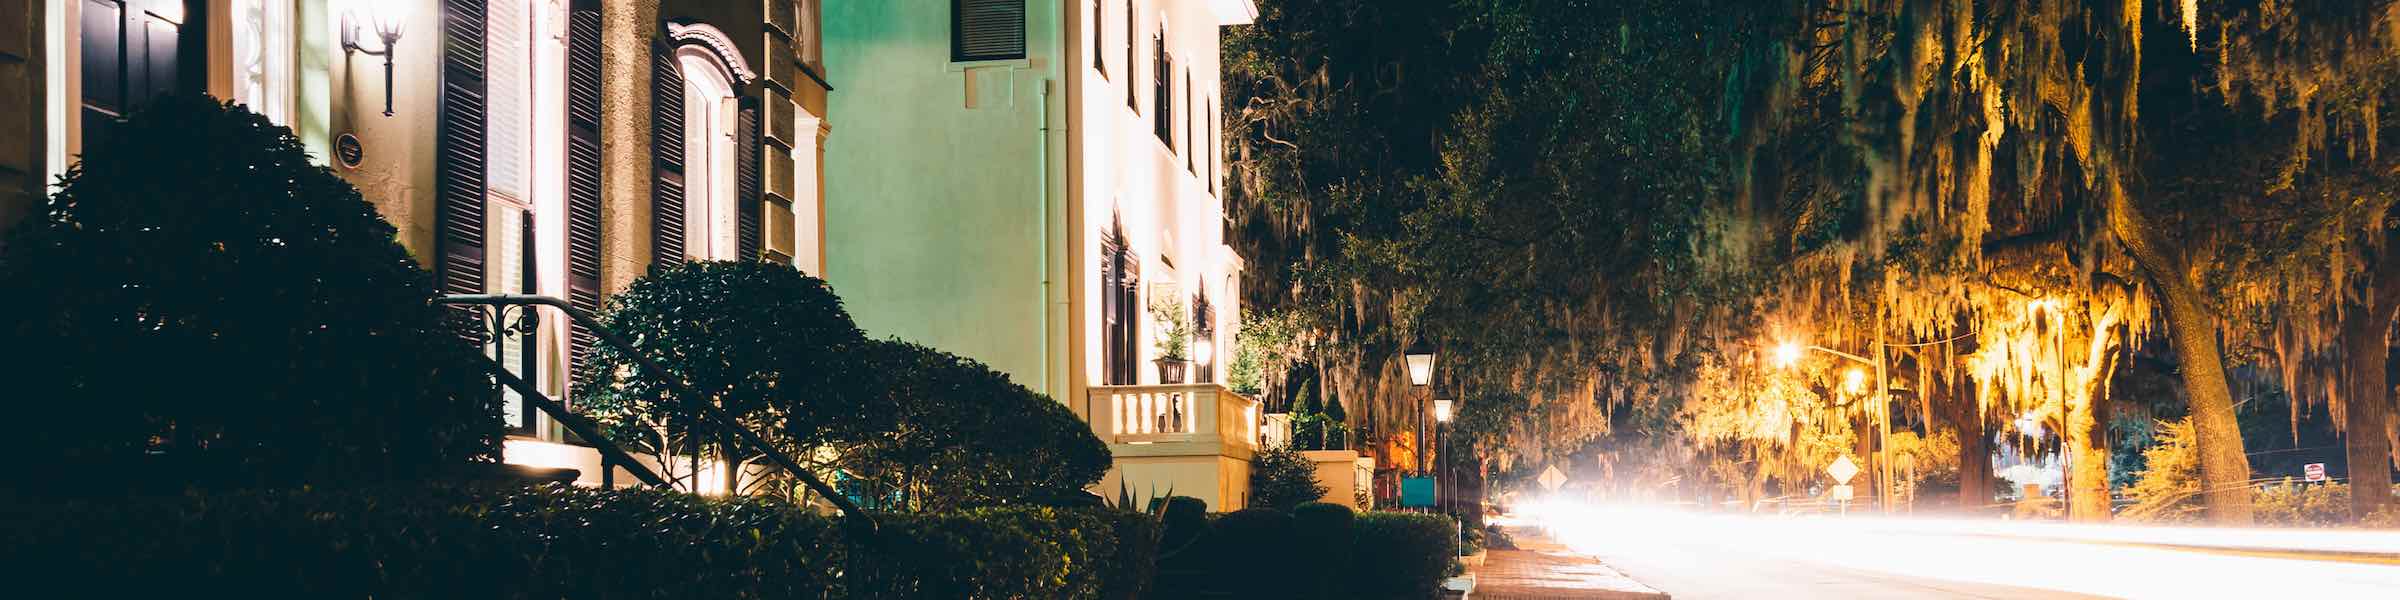 Night time view of Drayton Street and Forsyth Park, Savannah, GA.